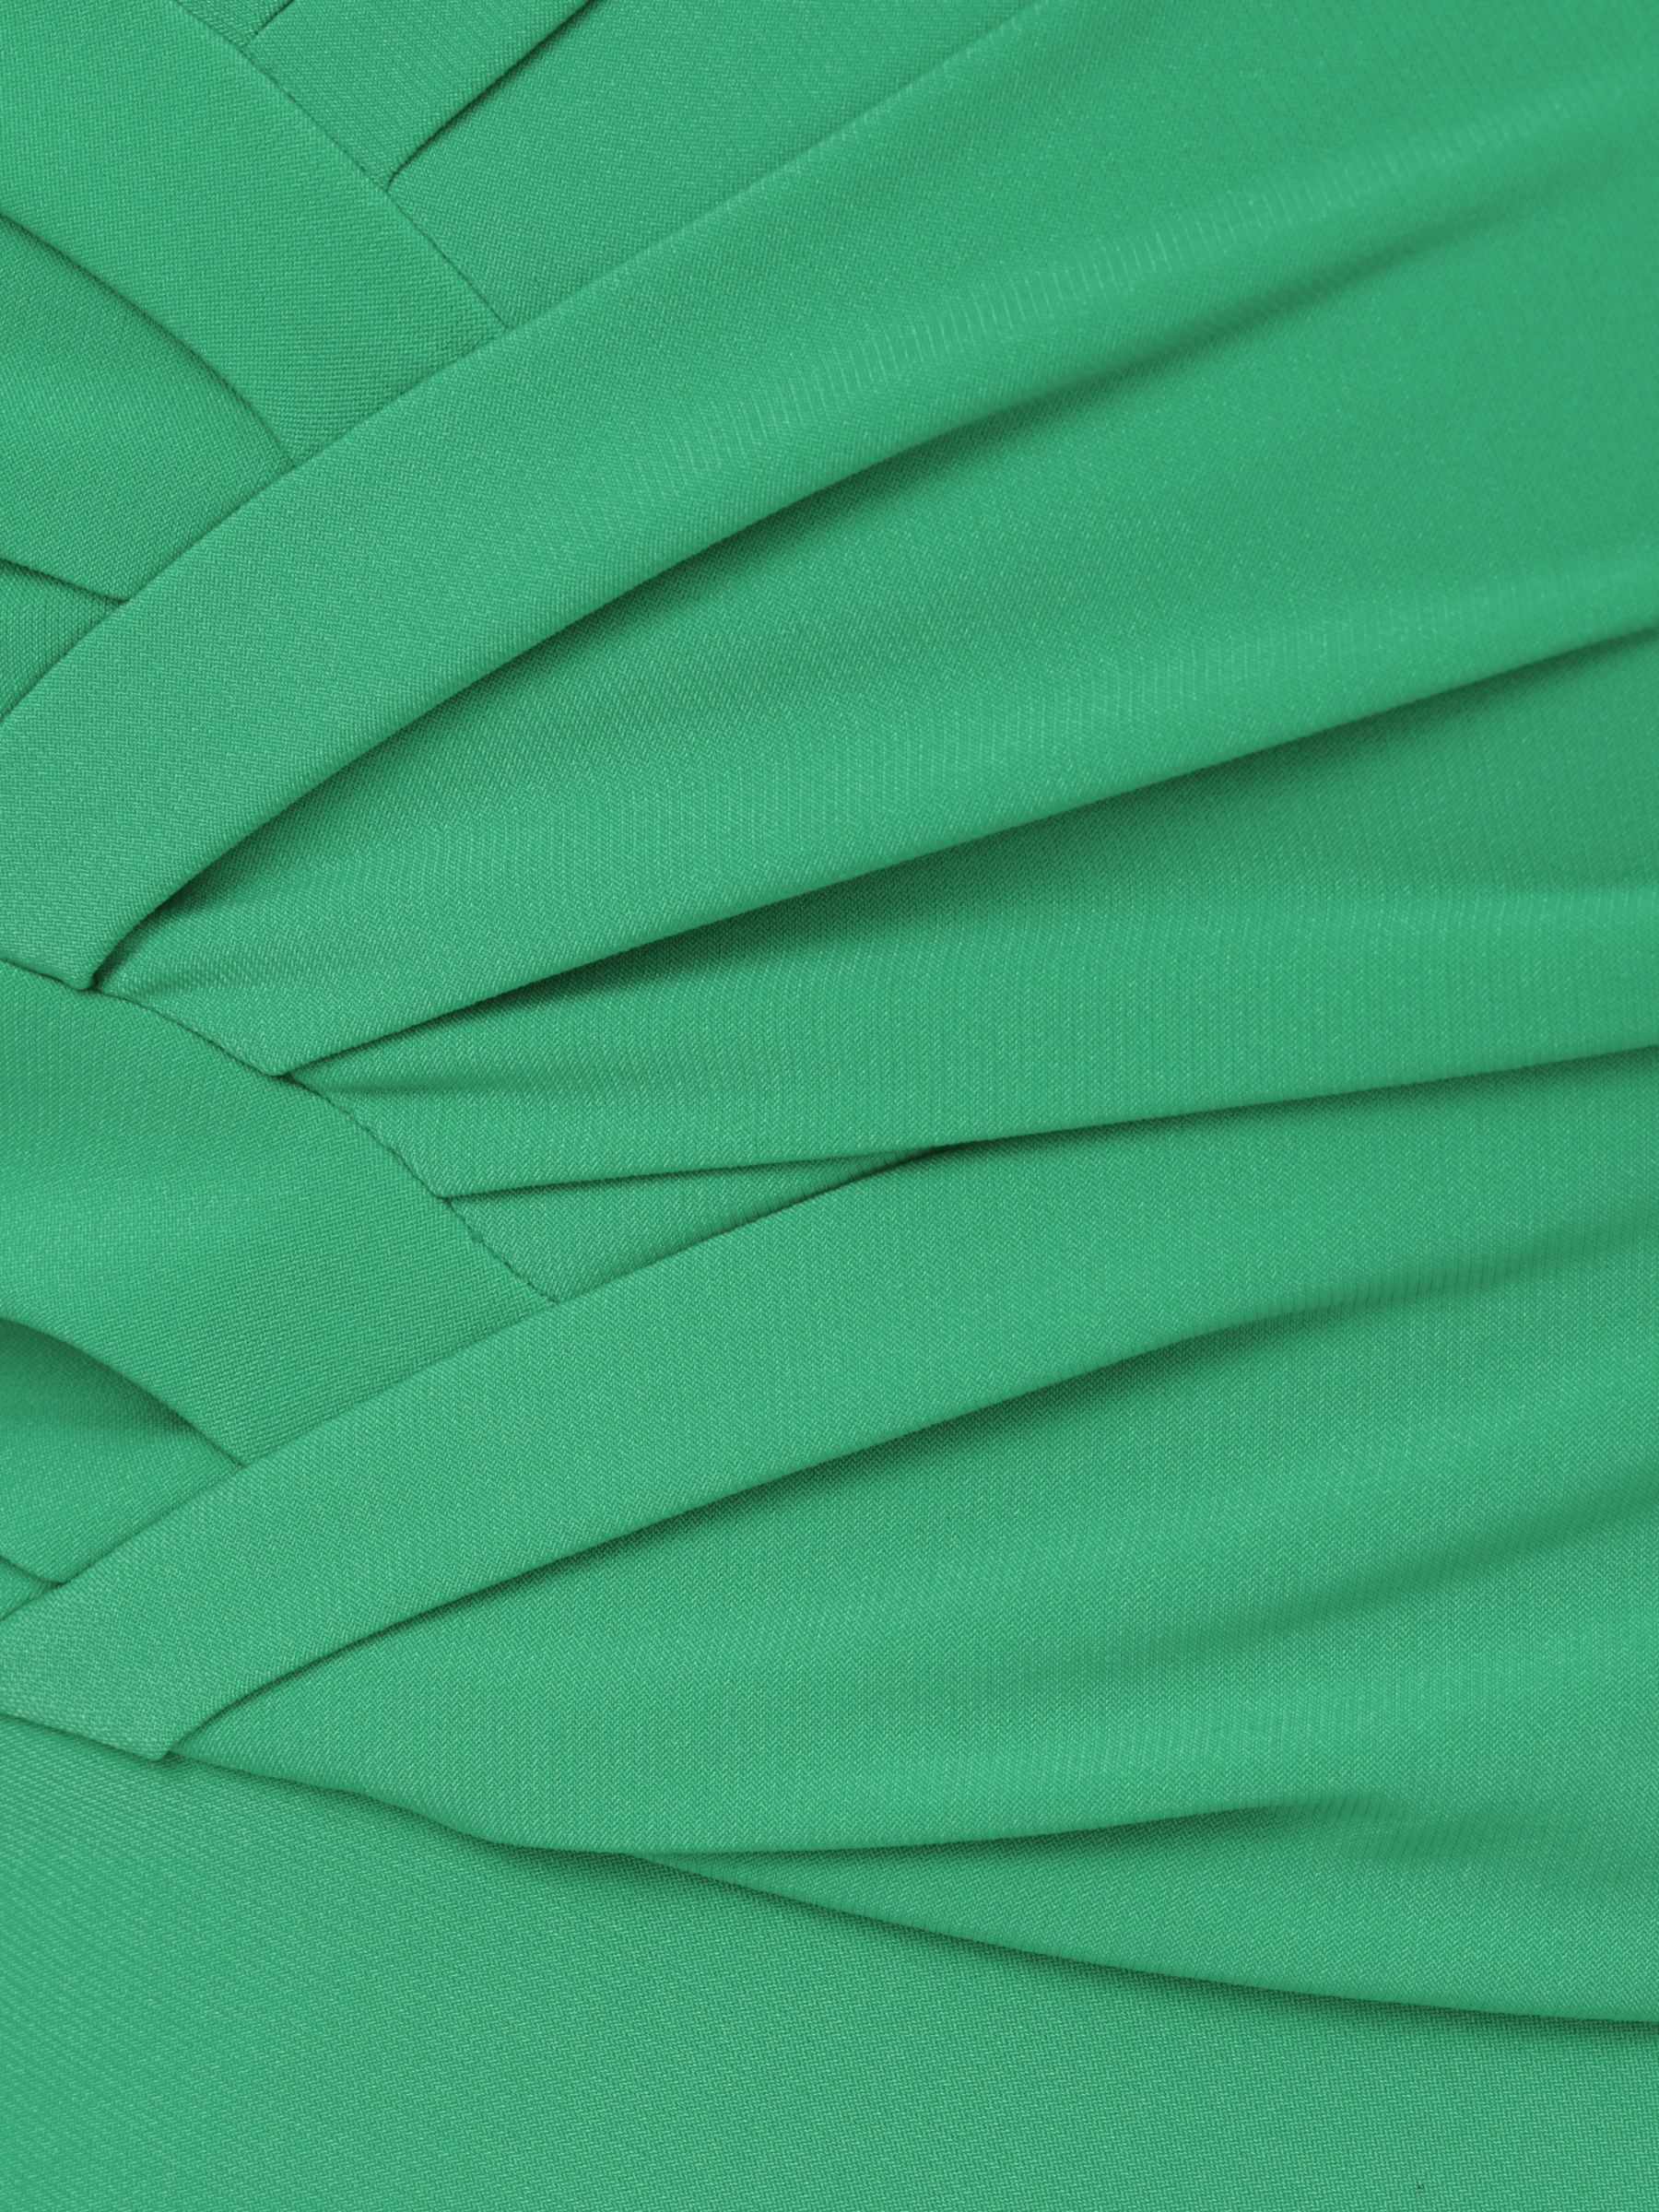 Adrianna Papell Pleated Layered Mini Dress, Botanic Green, 14